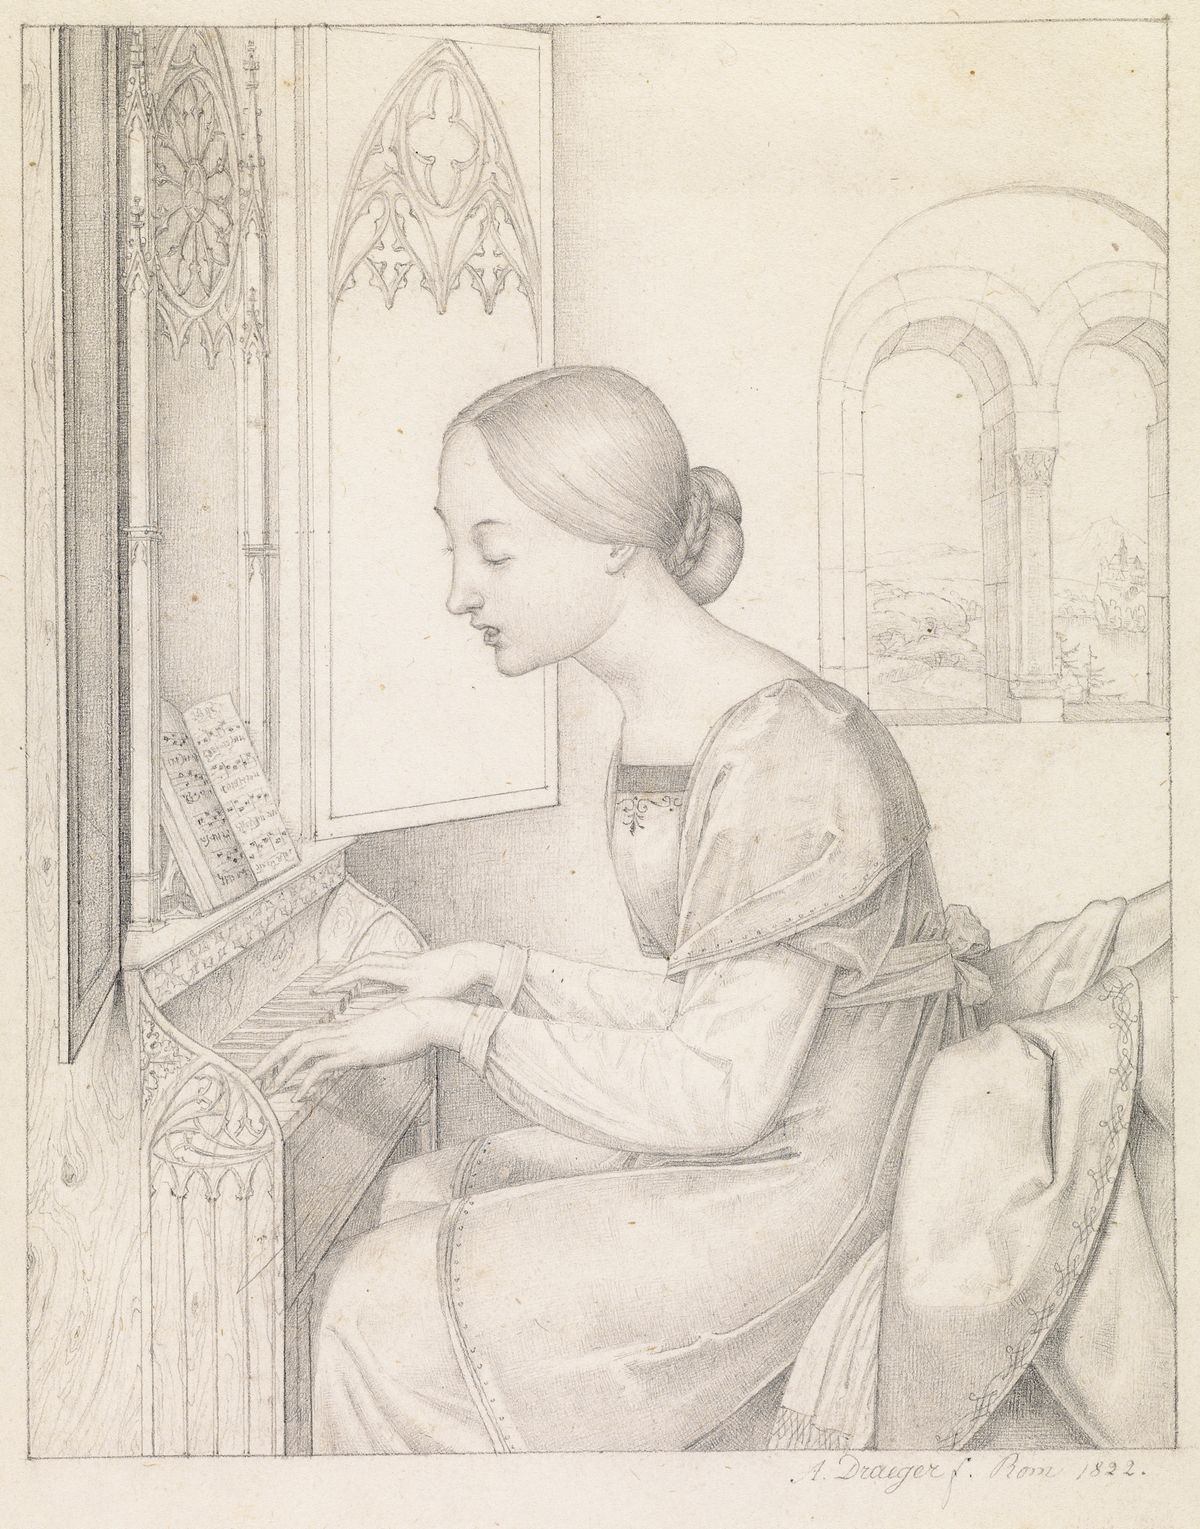 Saint Cecilia by Joseph Anton Draeger (1822) - Public Domain Catholic Drawing